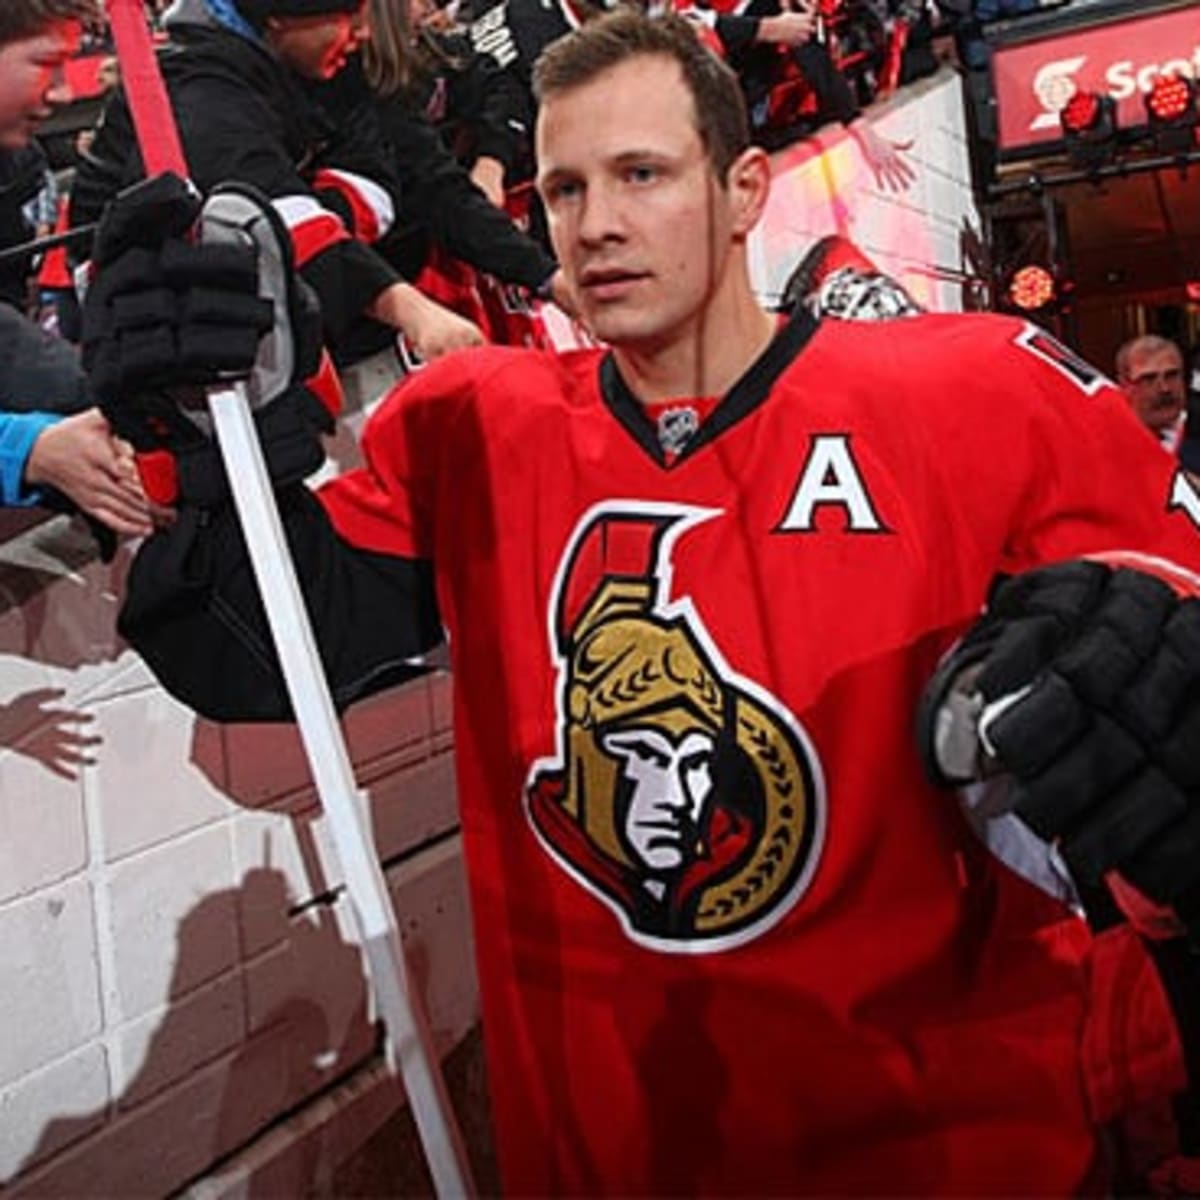 VIDEO: One-on-one with Jason Spezza of the Ottawa Senators - The